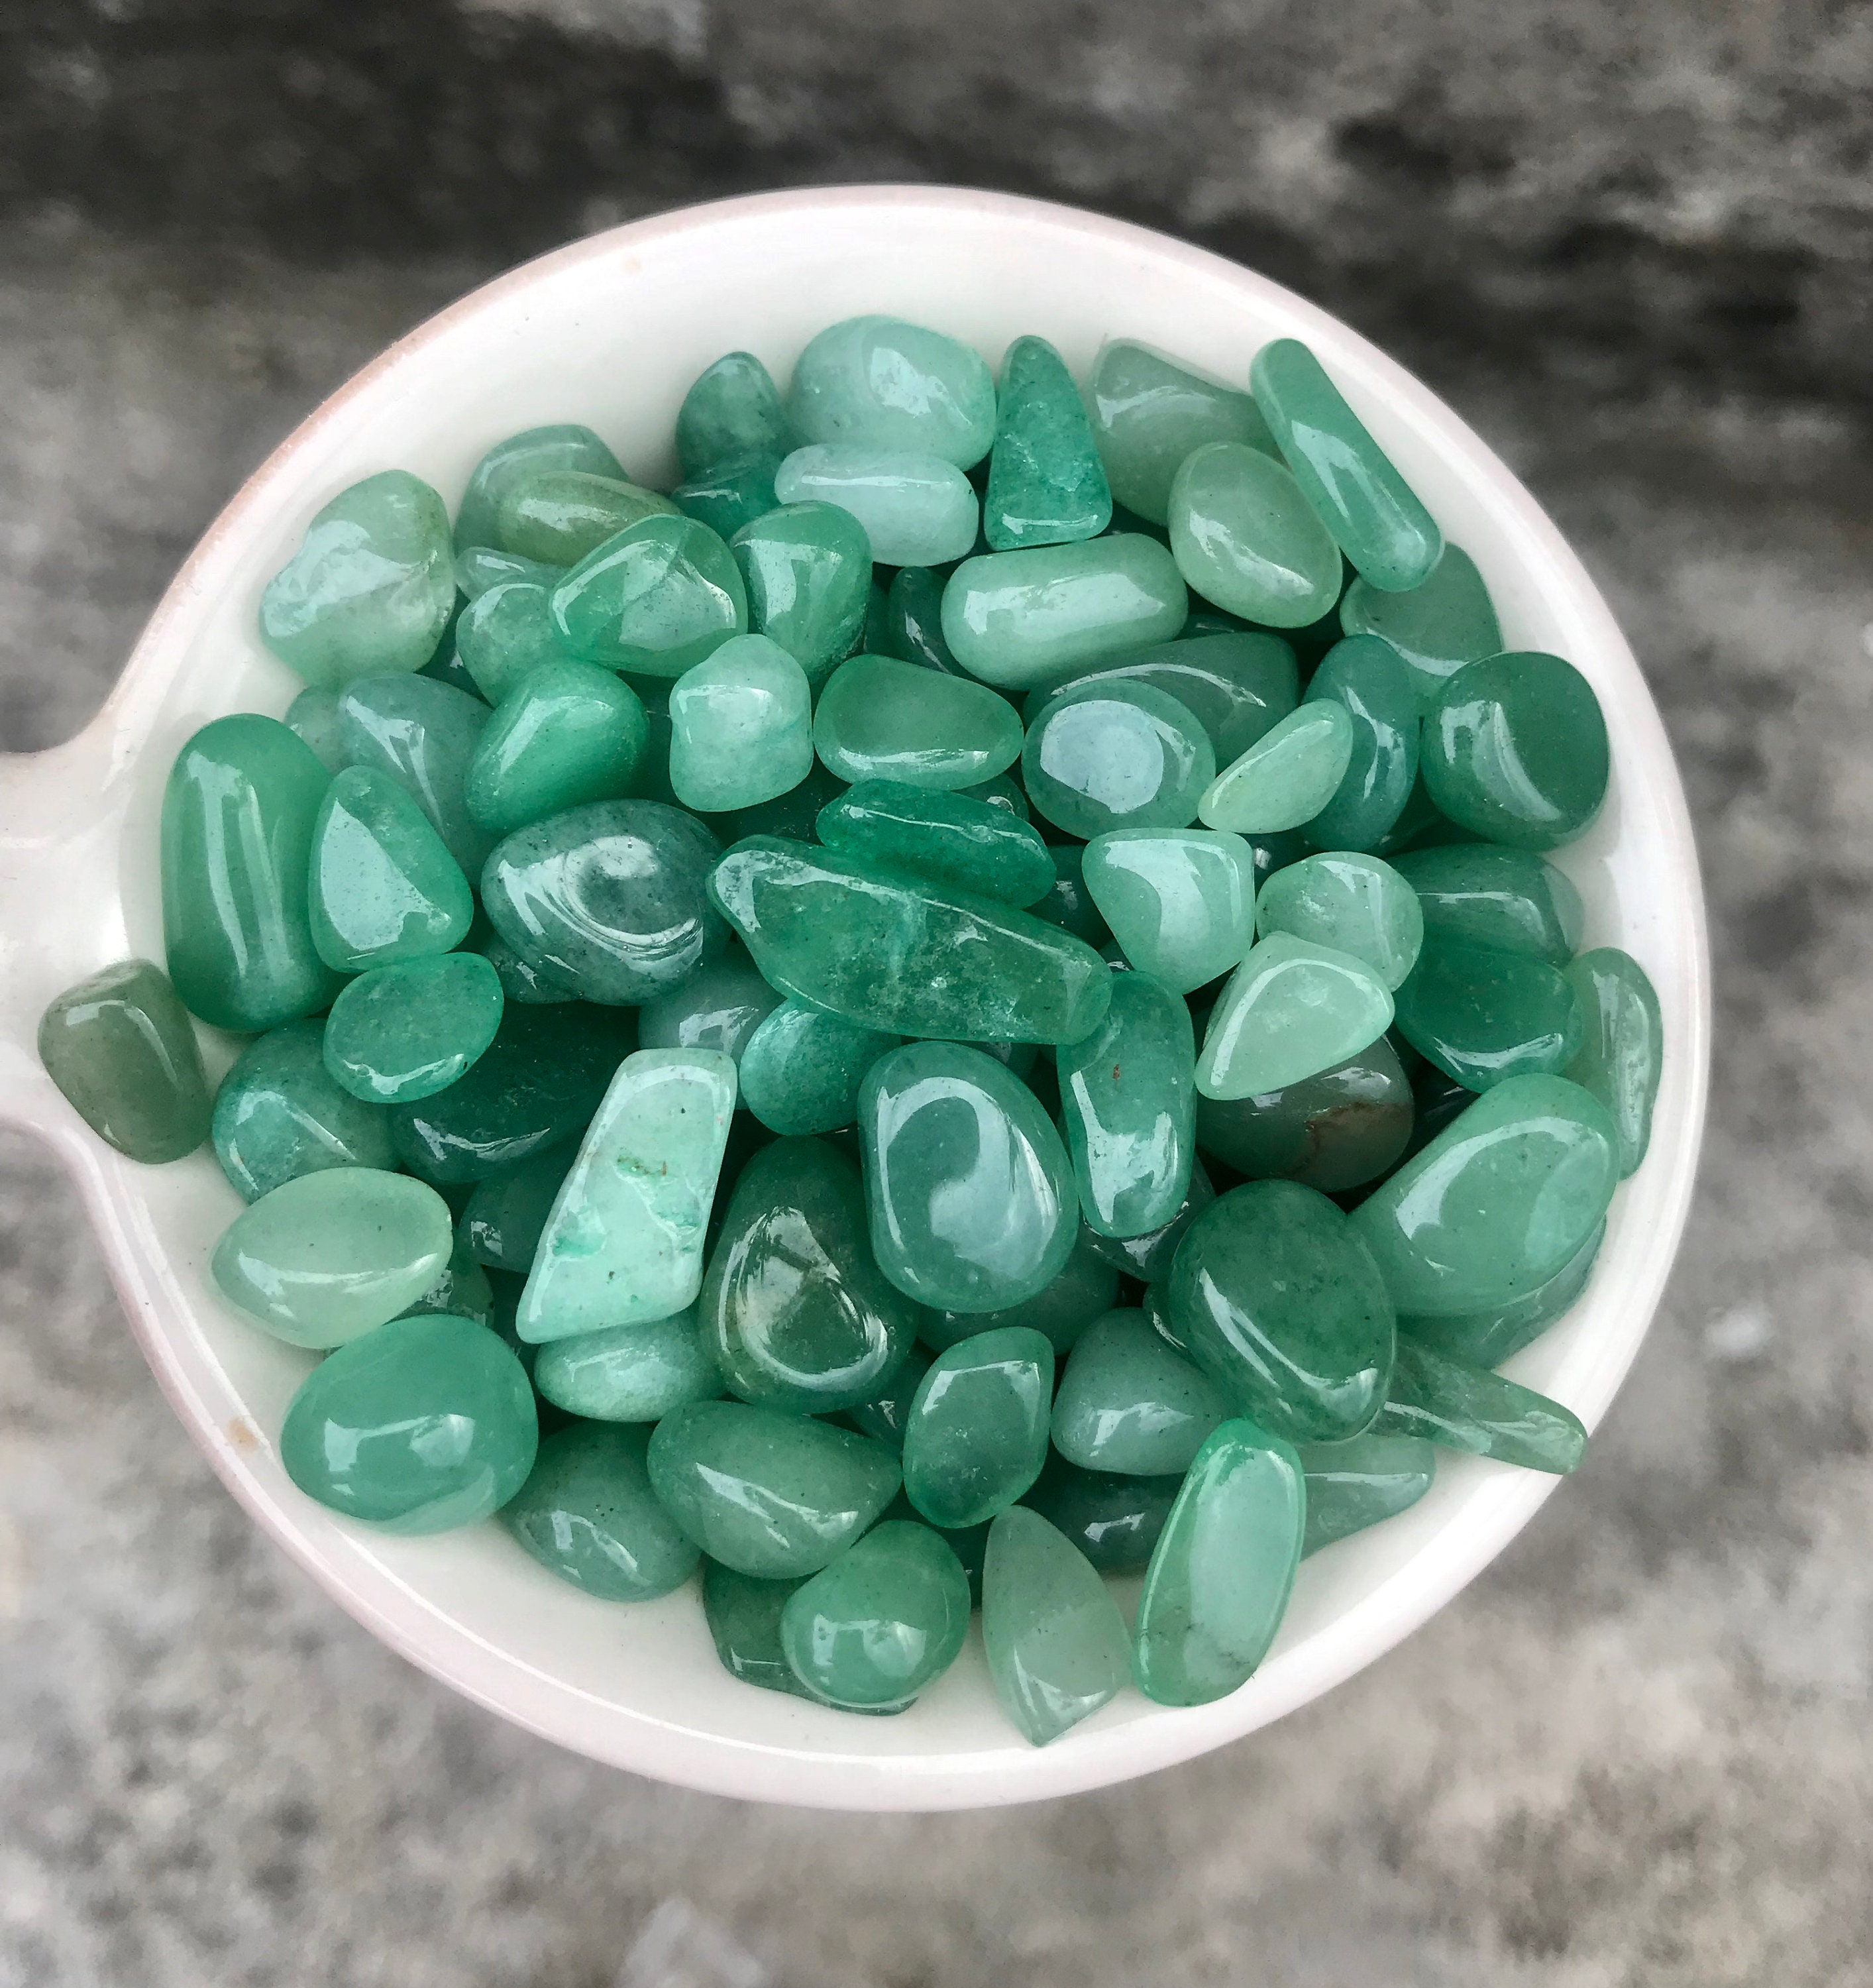 1 Bag 100g Colorful Mixed Irregular Shape Tumbled Stones Rock Gem Beads  Chips 